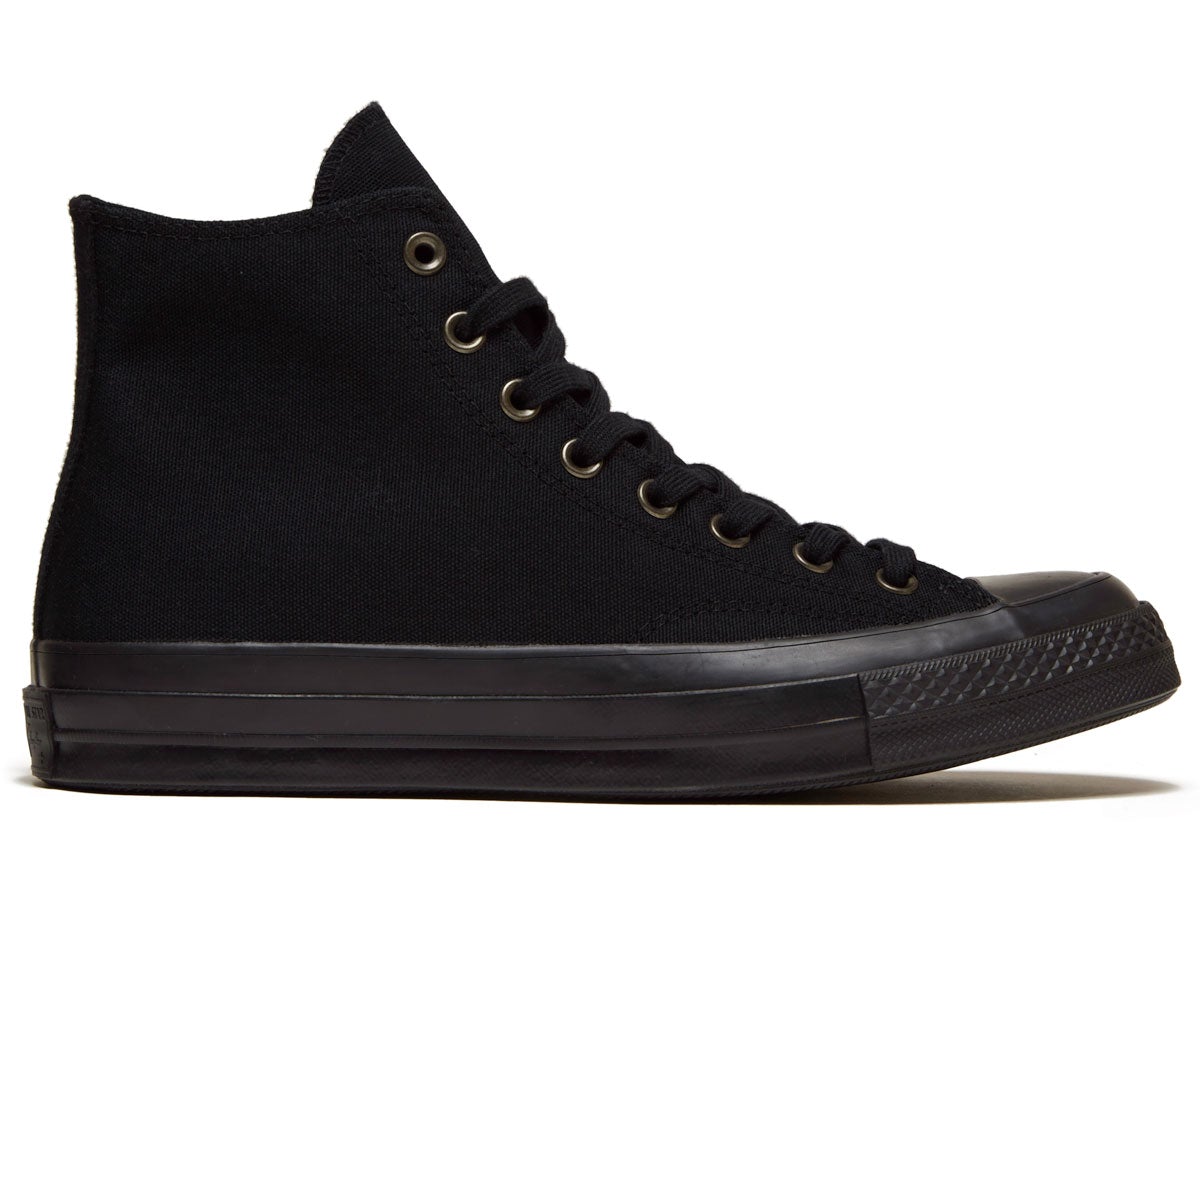 Converse Chuck 70 Vintage Hi Shoes - Black/Almost Black/Black image 1